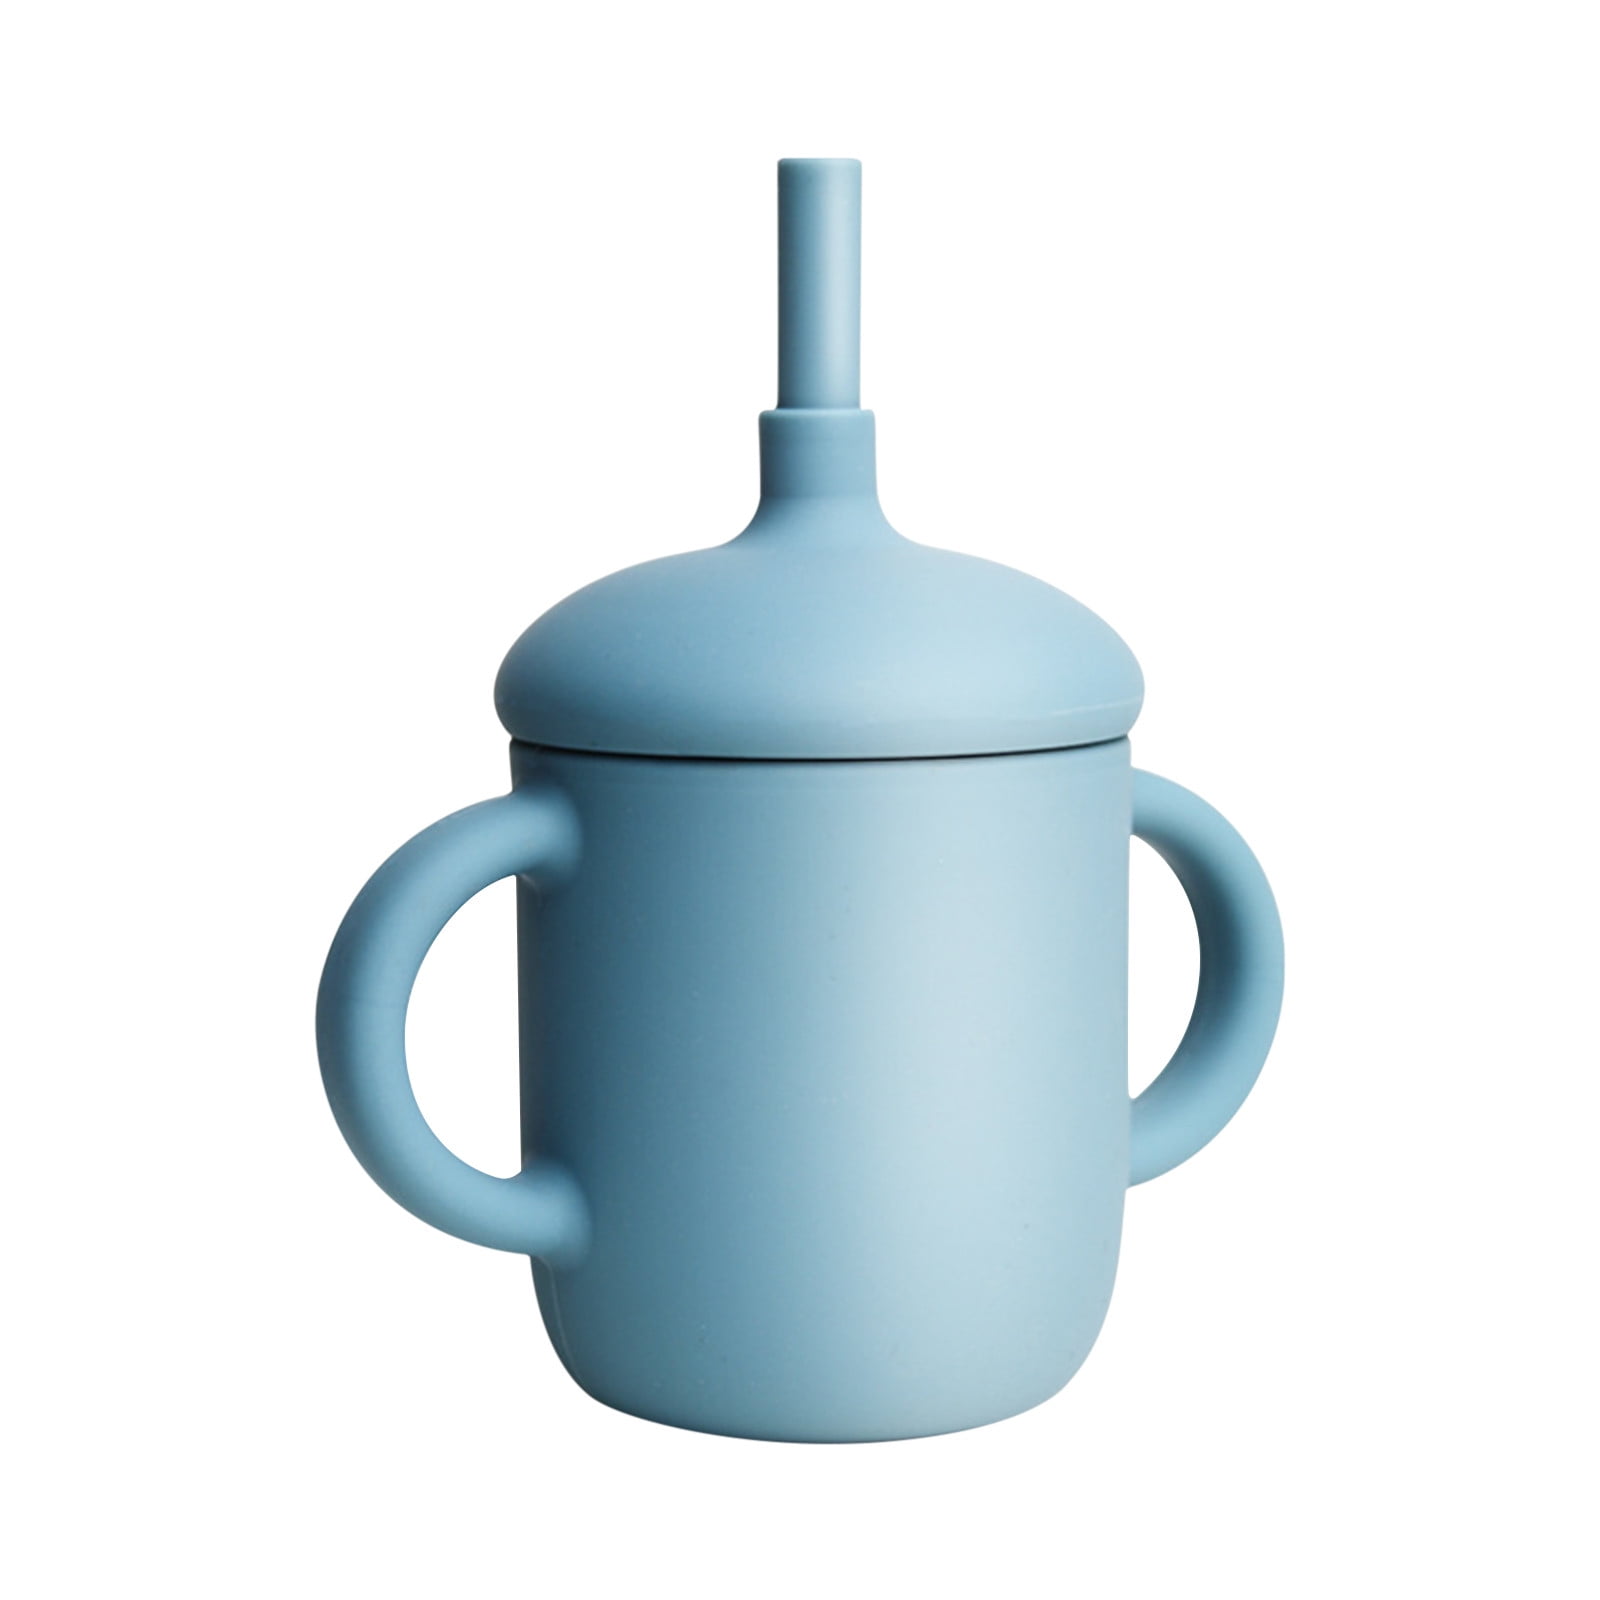 Vikakiooze Children's Cup Simple Modern Mug Tumbler with